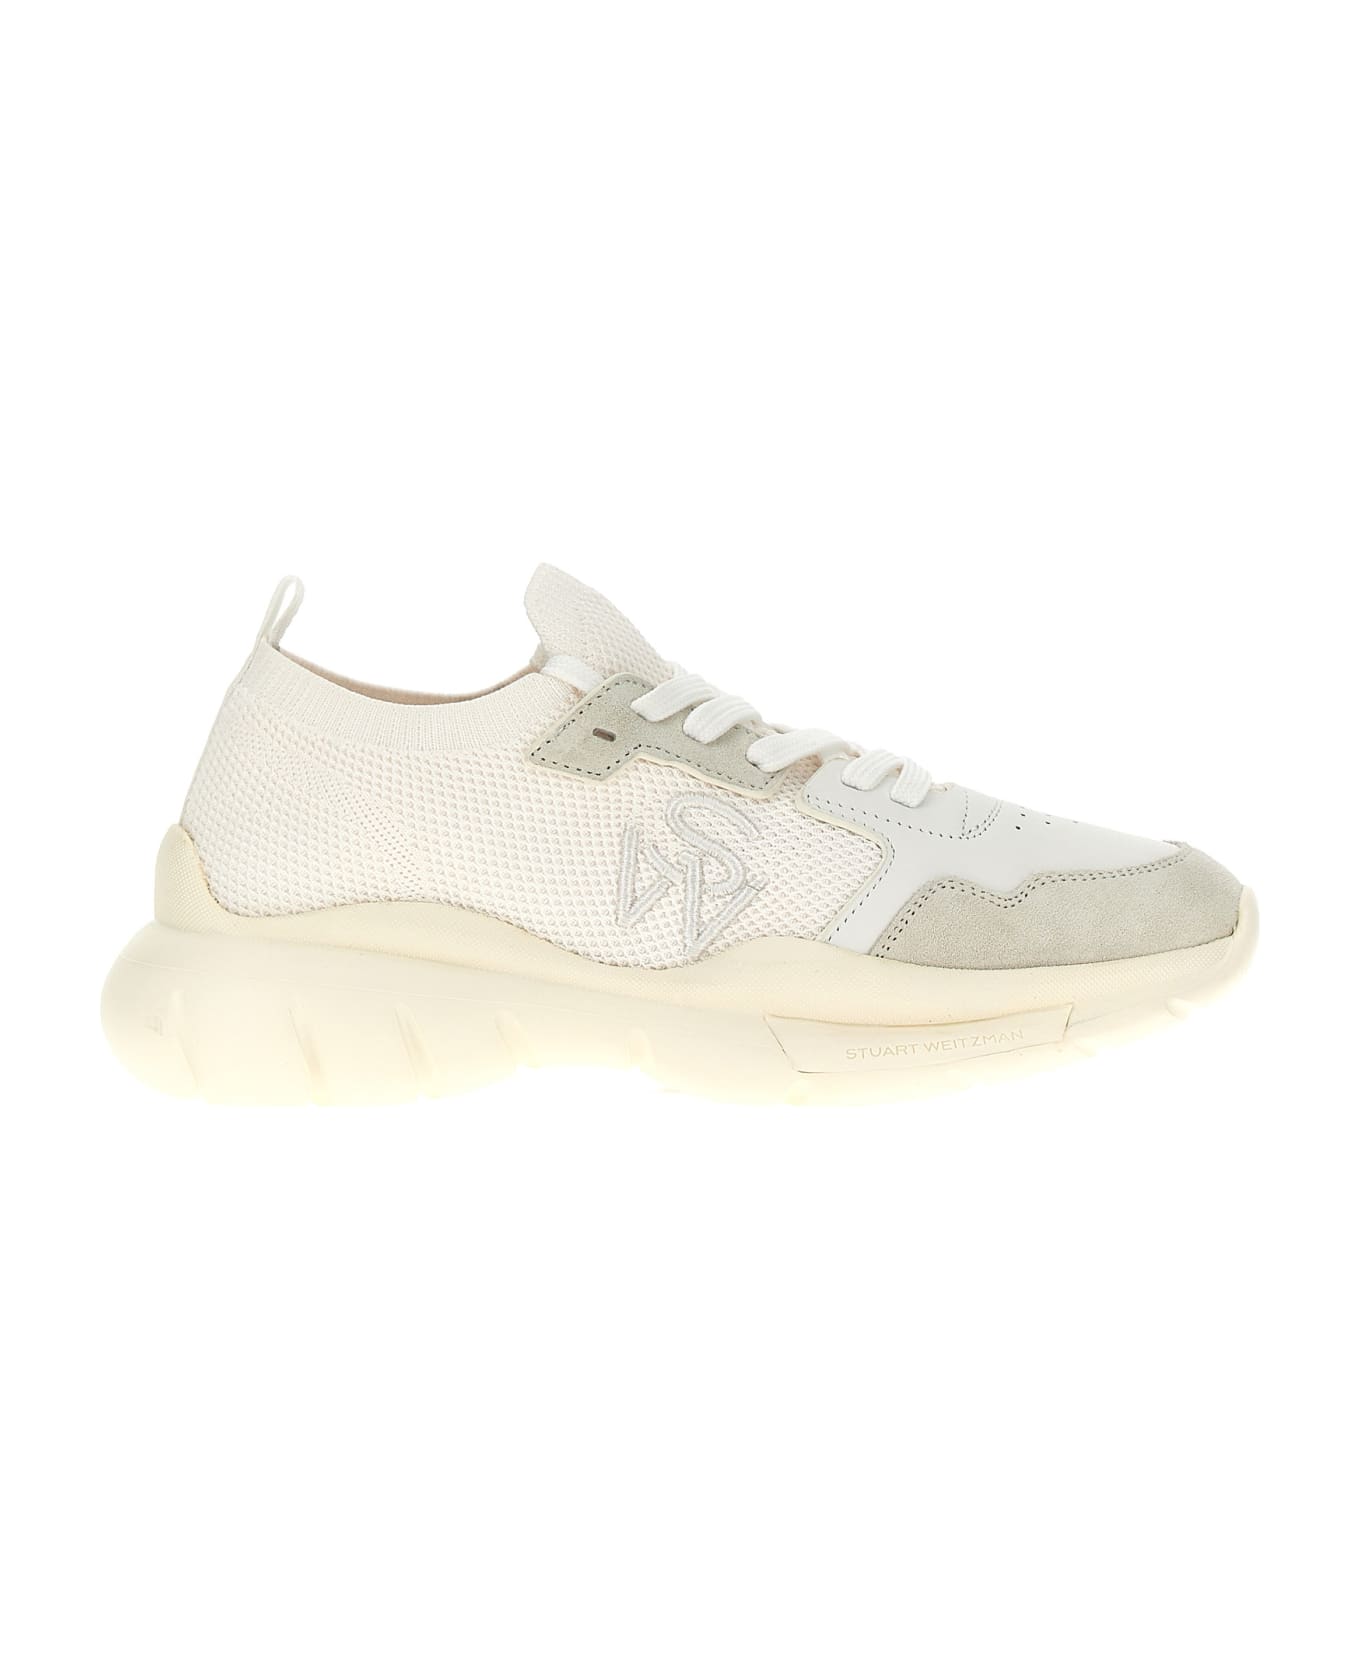 Stuart Weitzman '50/50' Sneakers - White スニーカー